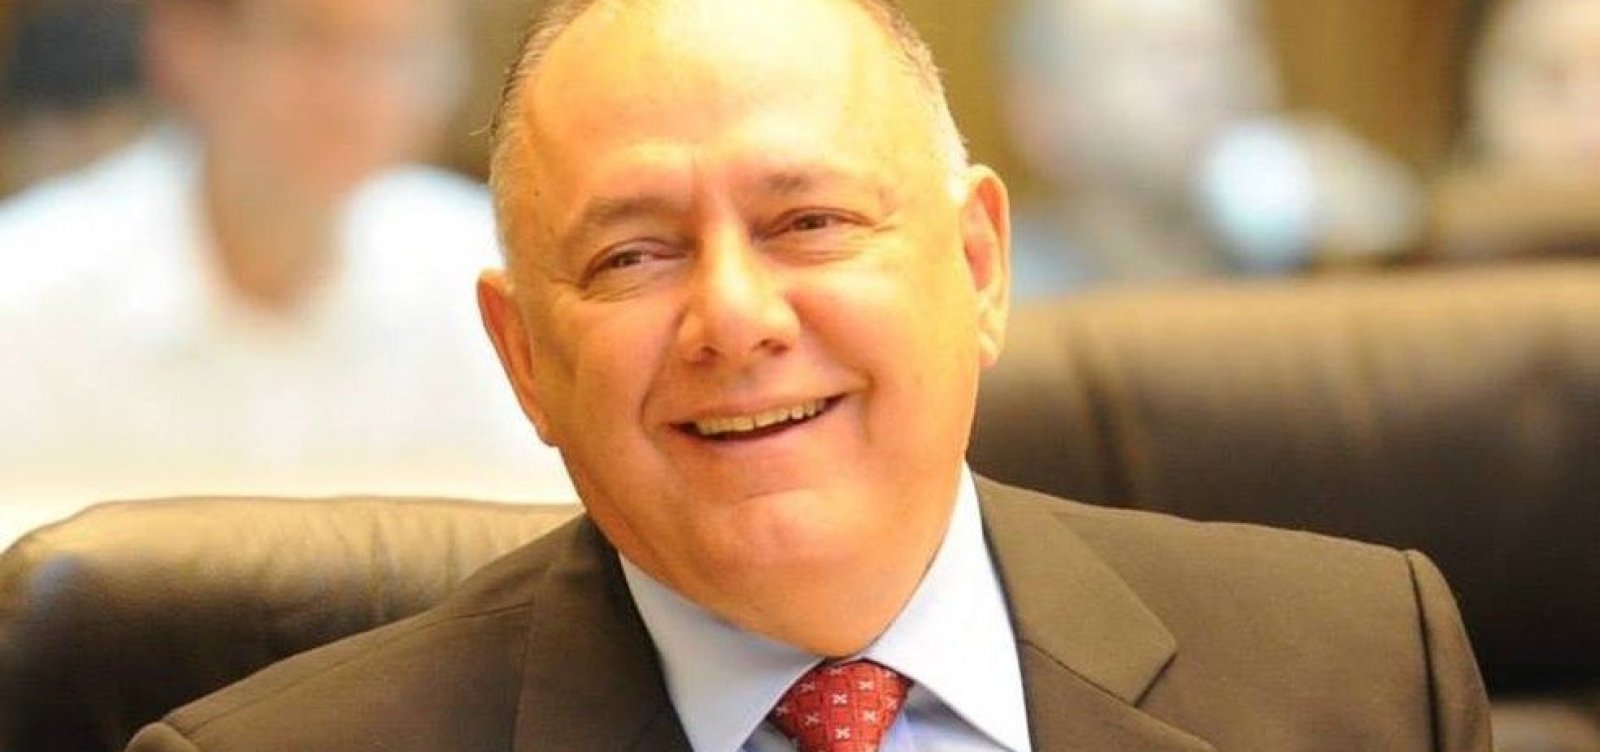 Deputado federal, José Carlos Schiavinato morre aos 66 anos, vítima da Covid-19